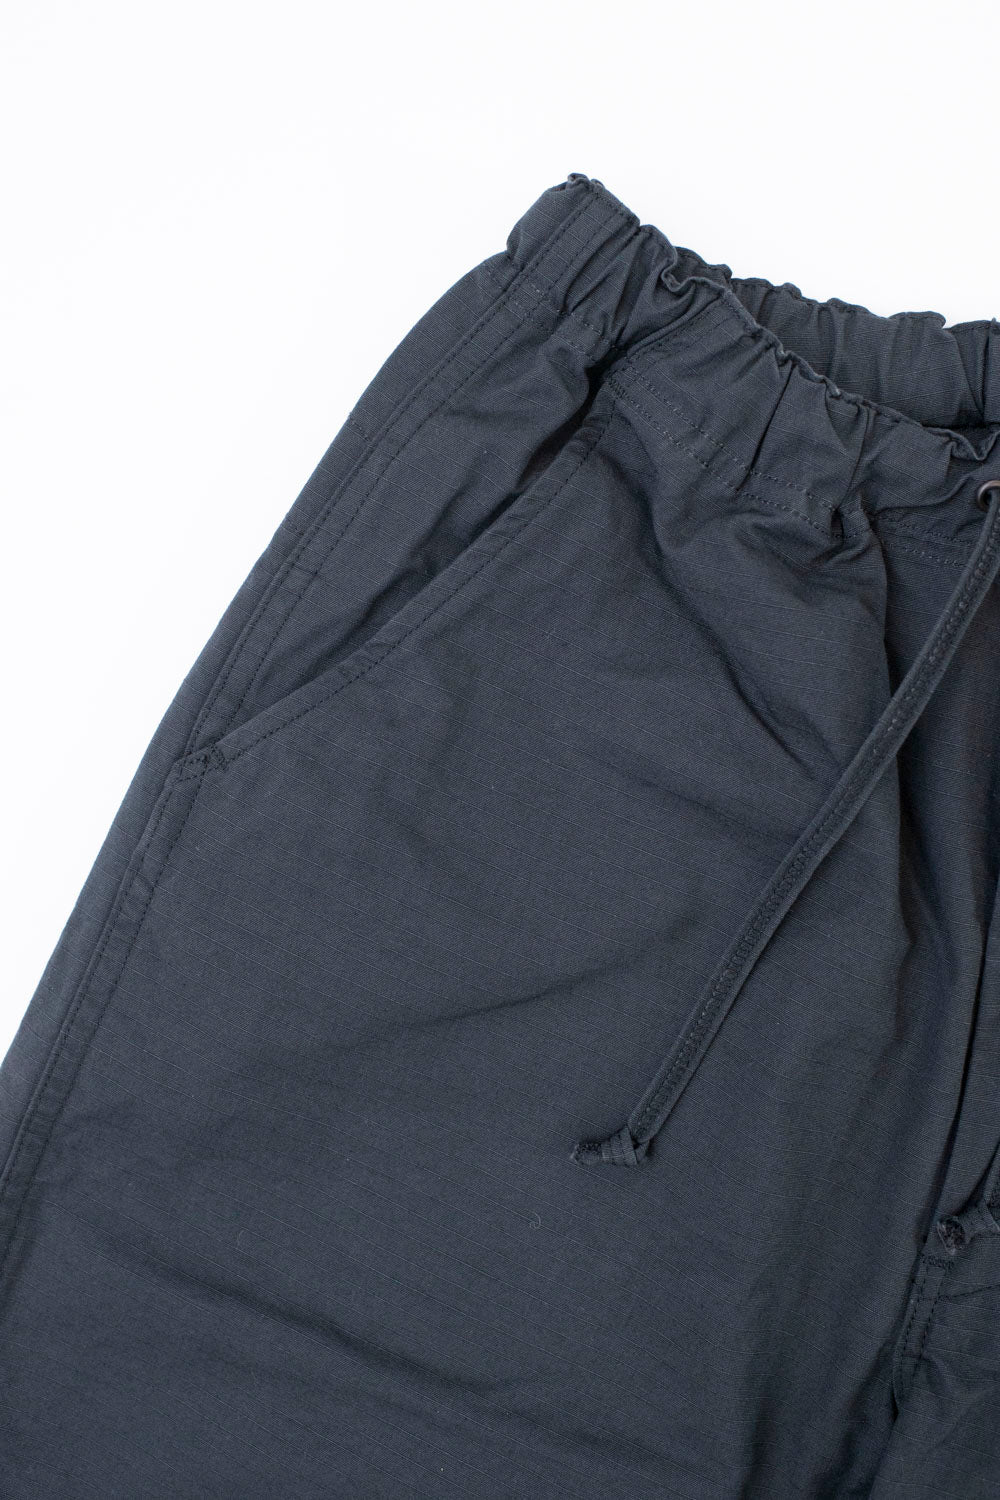 03-7022-02 - New Yorker Shorts - Sumi Black Ripstop